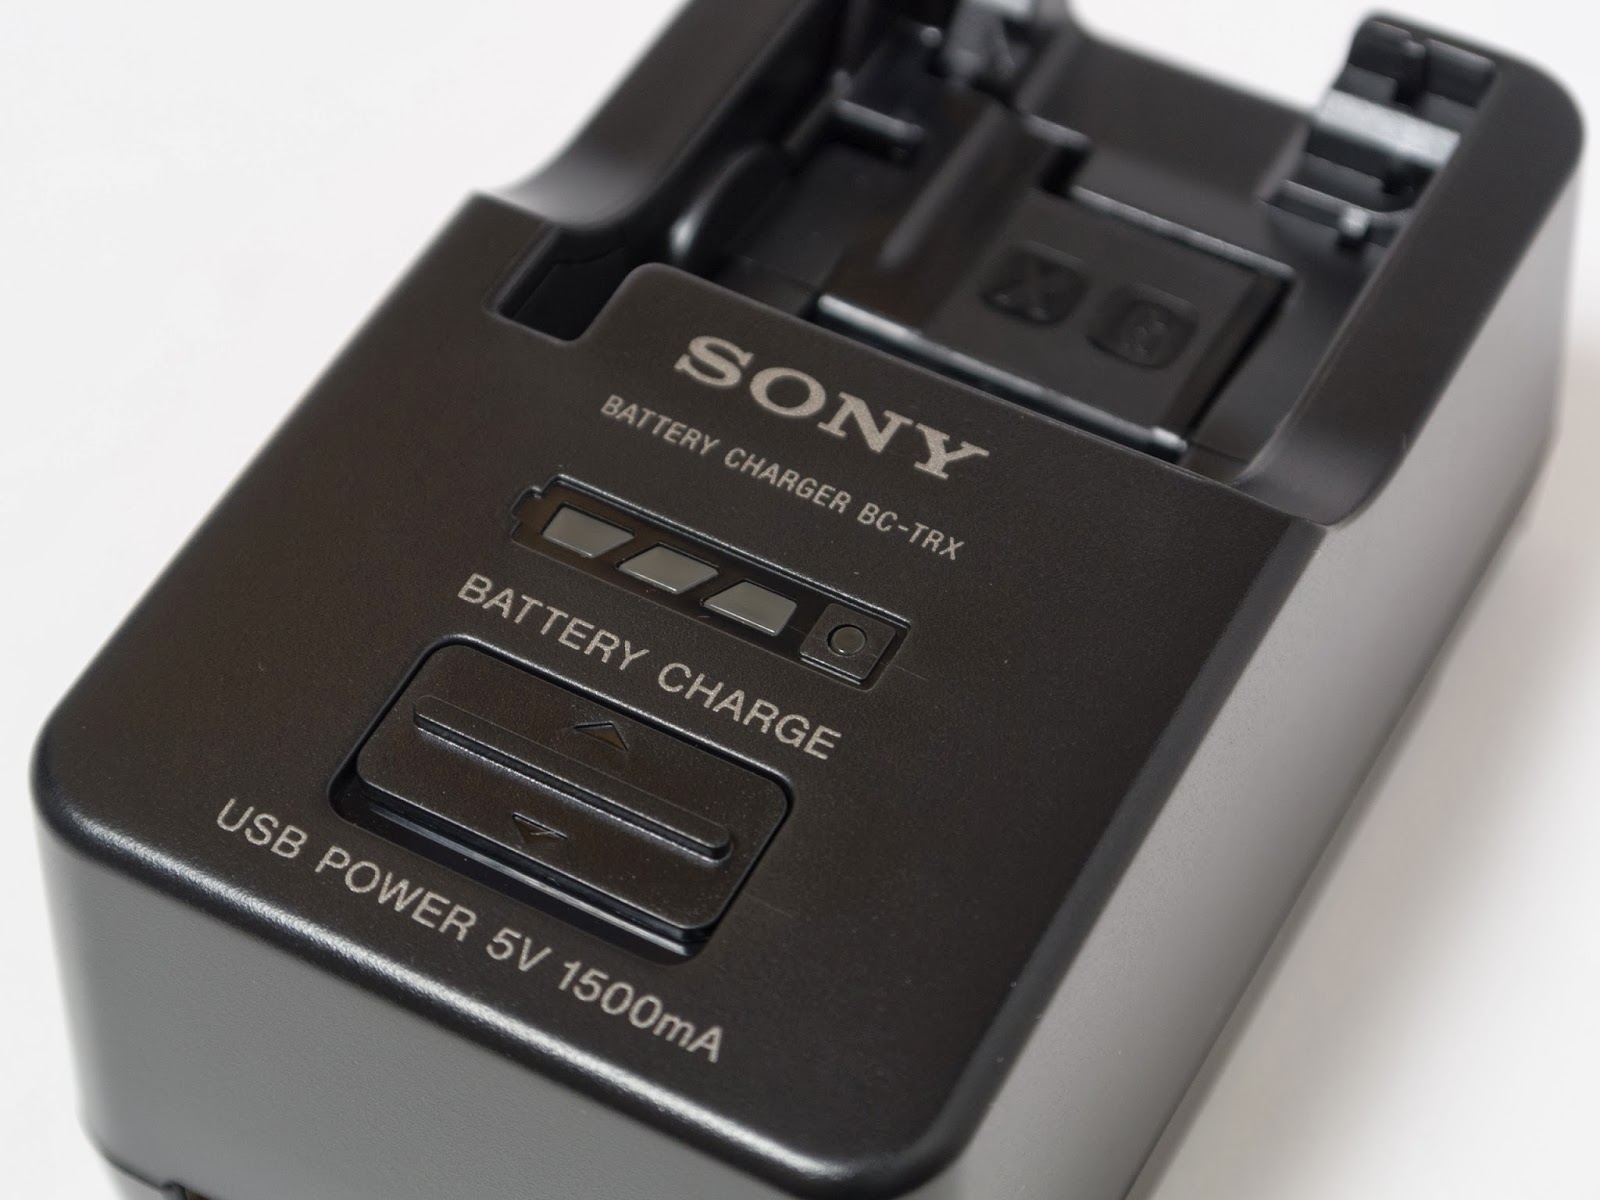 USB出力可能なデジカメ充電器、ソニー「BC-TRX」購入 - Fonland